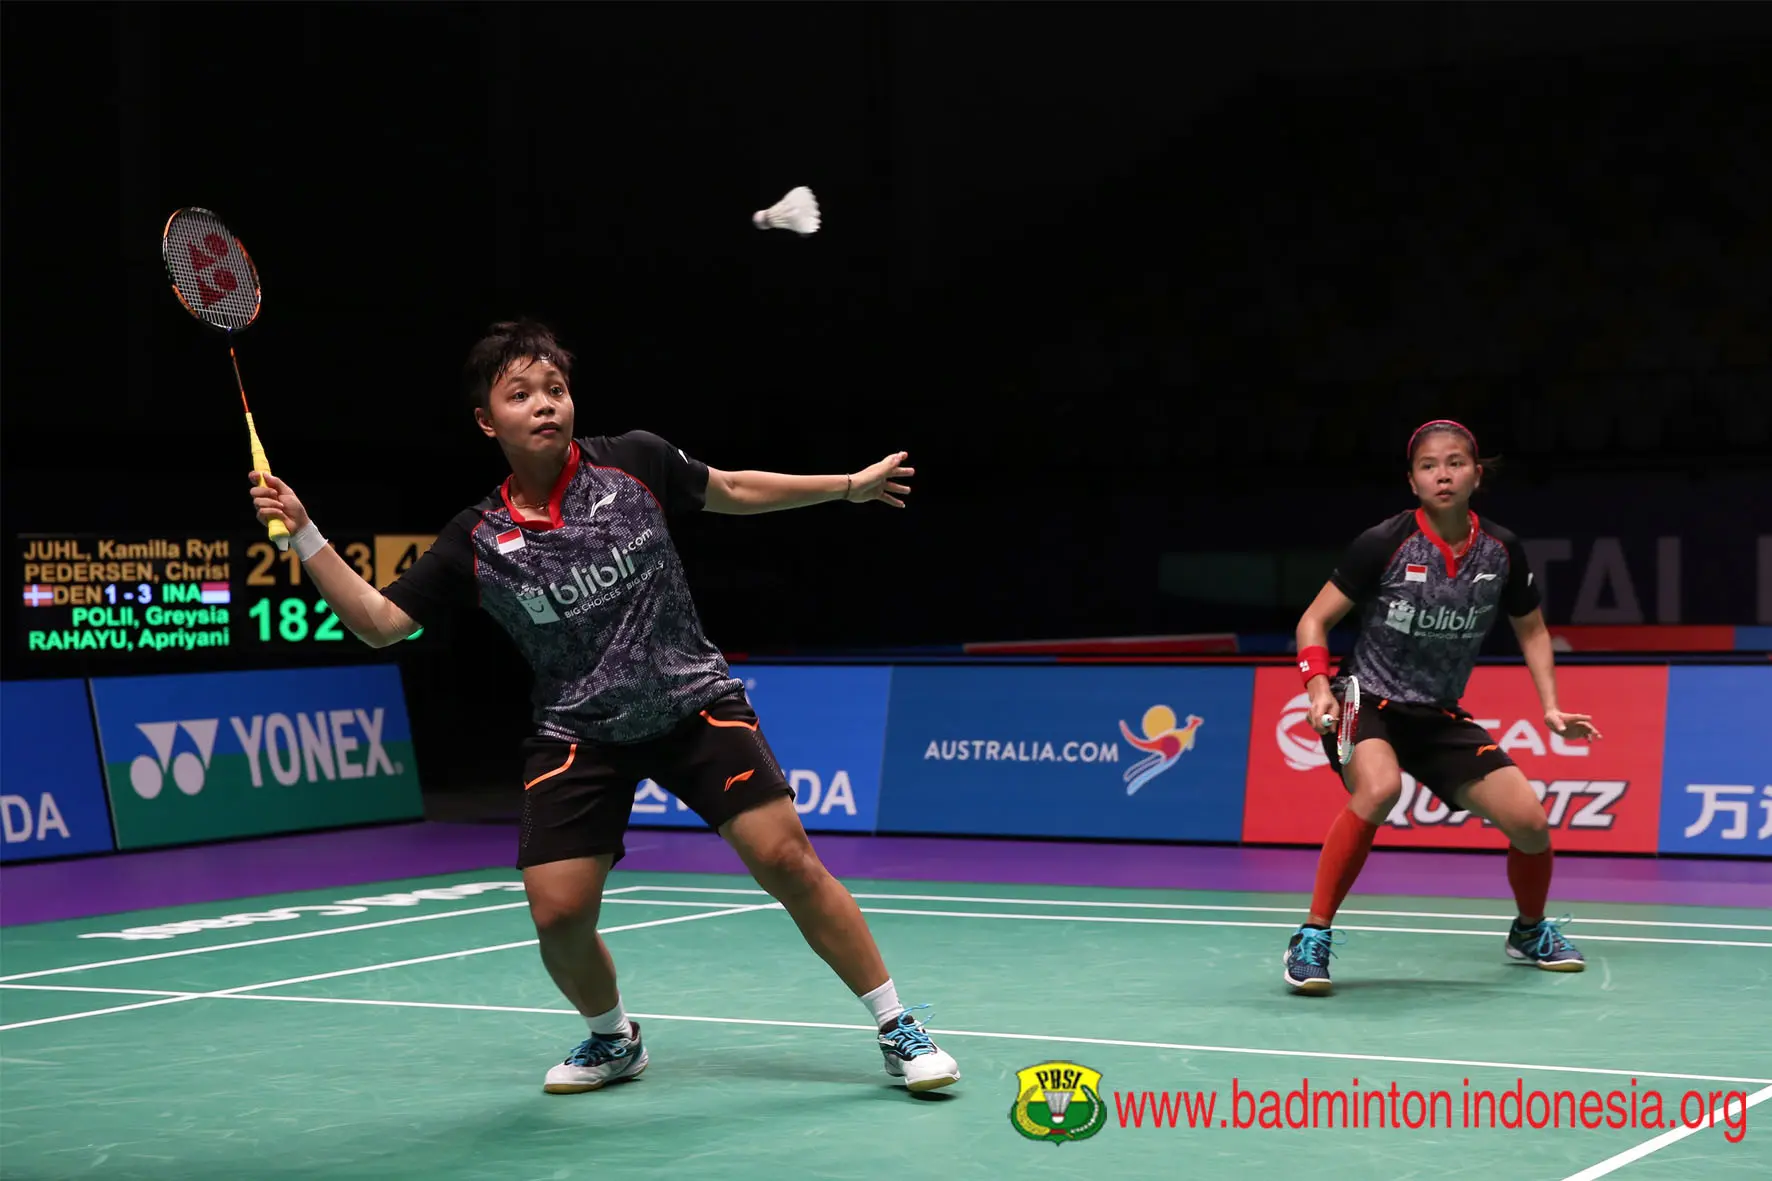 Apriani Rahayu saat unjuk kebolehan di salah satu turnamen dunia (Badminton Indonesia)